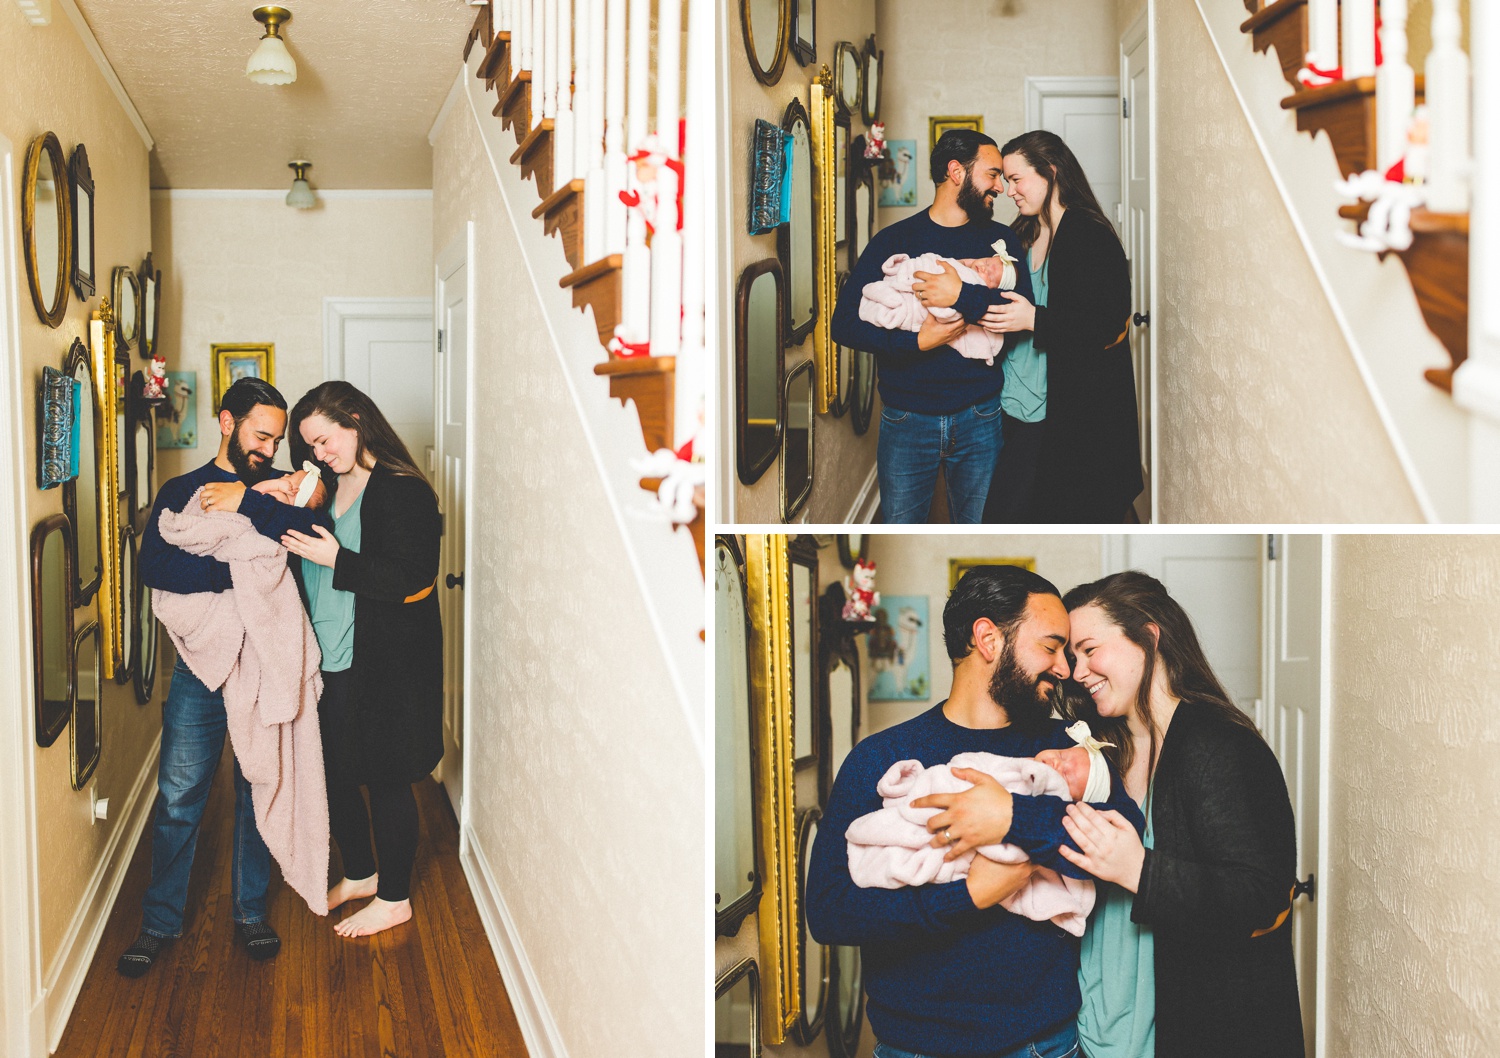 newborn family photographs taken in hallway 